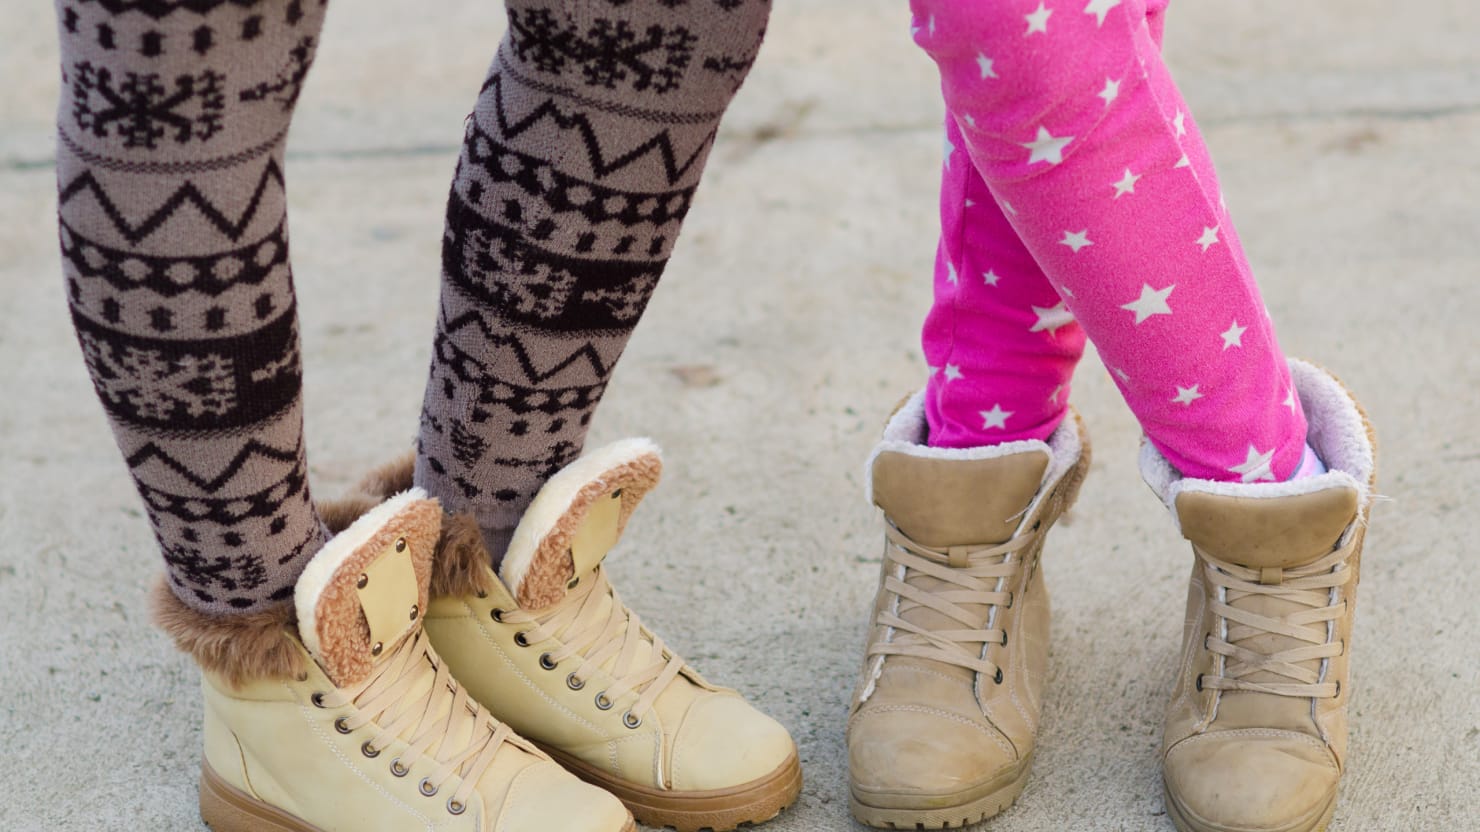 Boodilicious'-Legging Ban for Middle School Girls Infuriates Black Mom